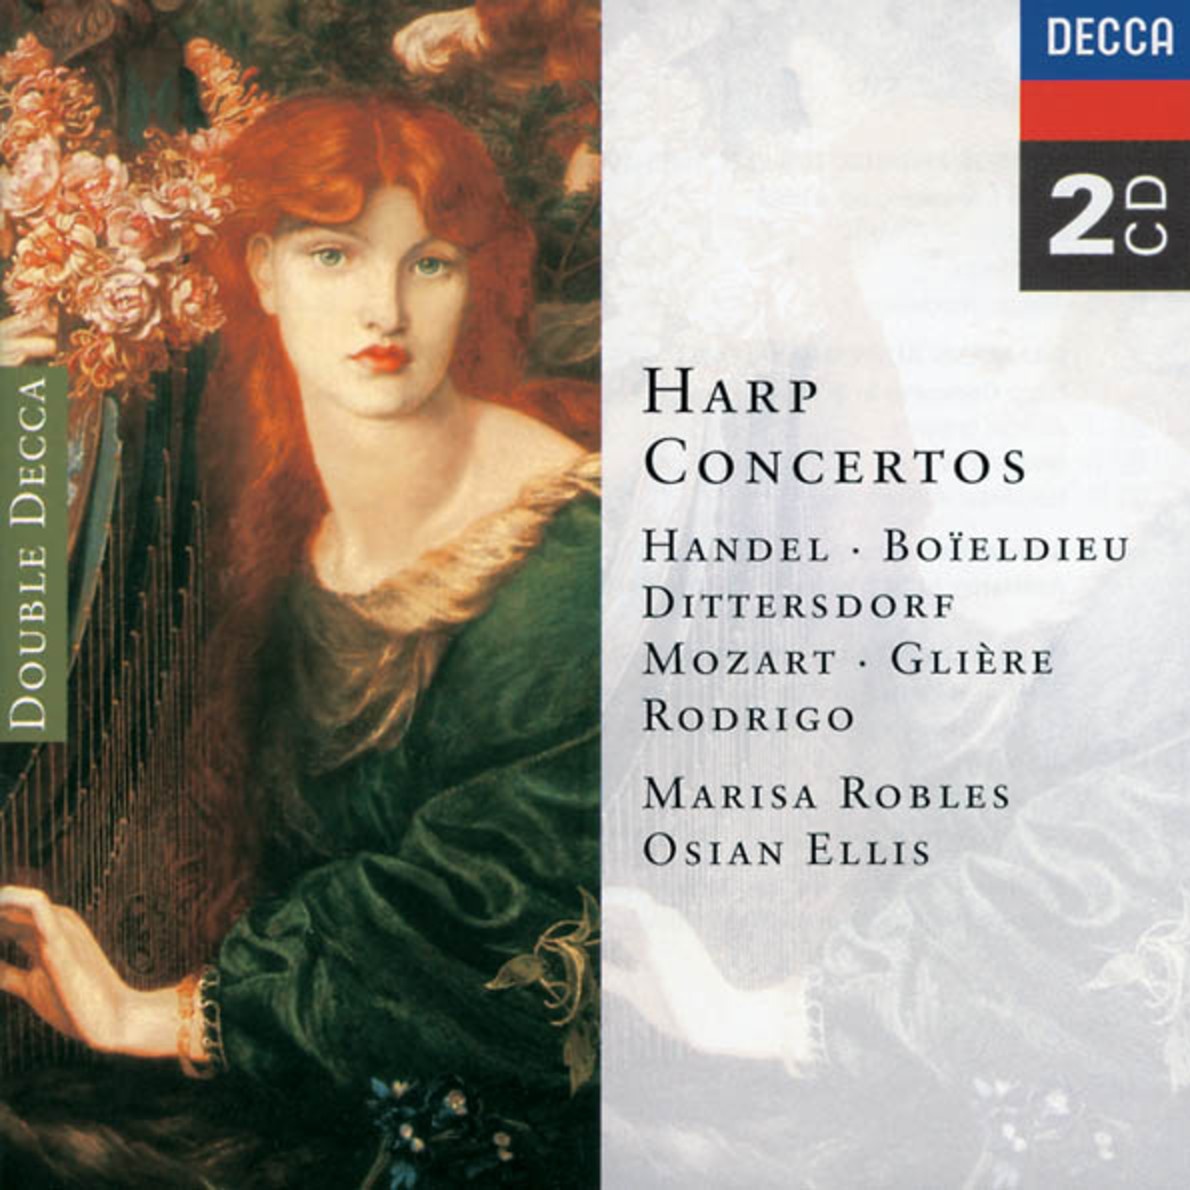 Harp Concerto in A major:2. Larghetto